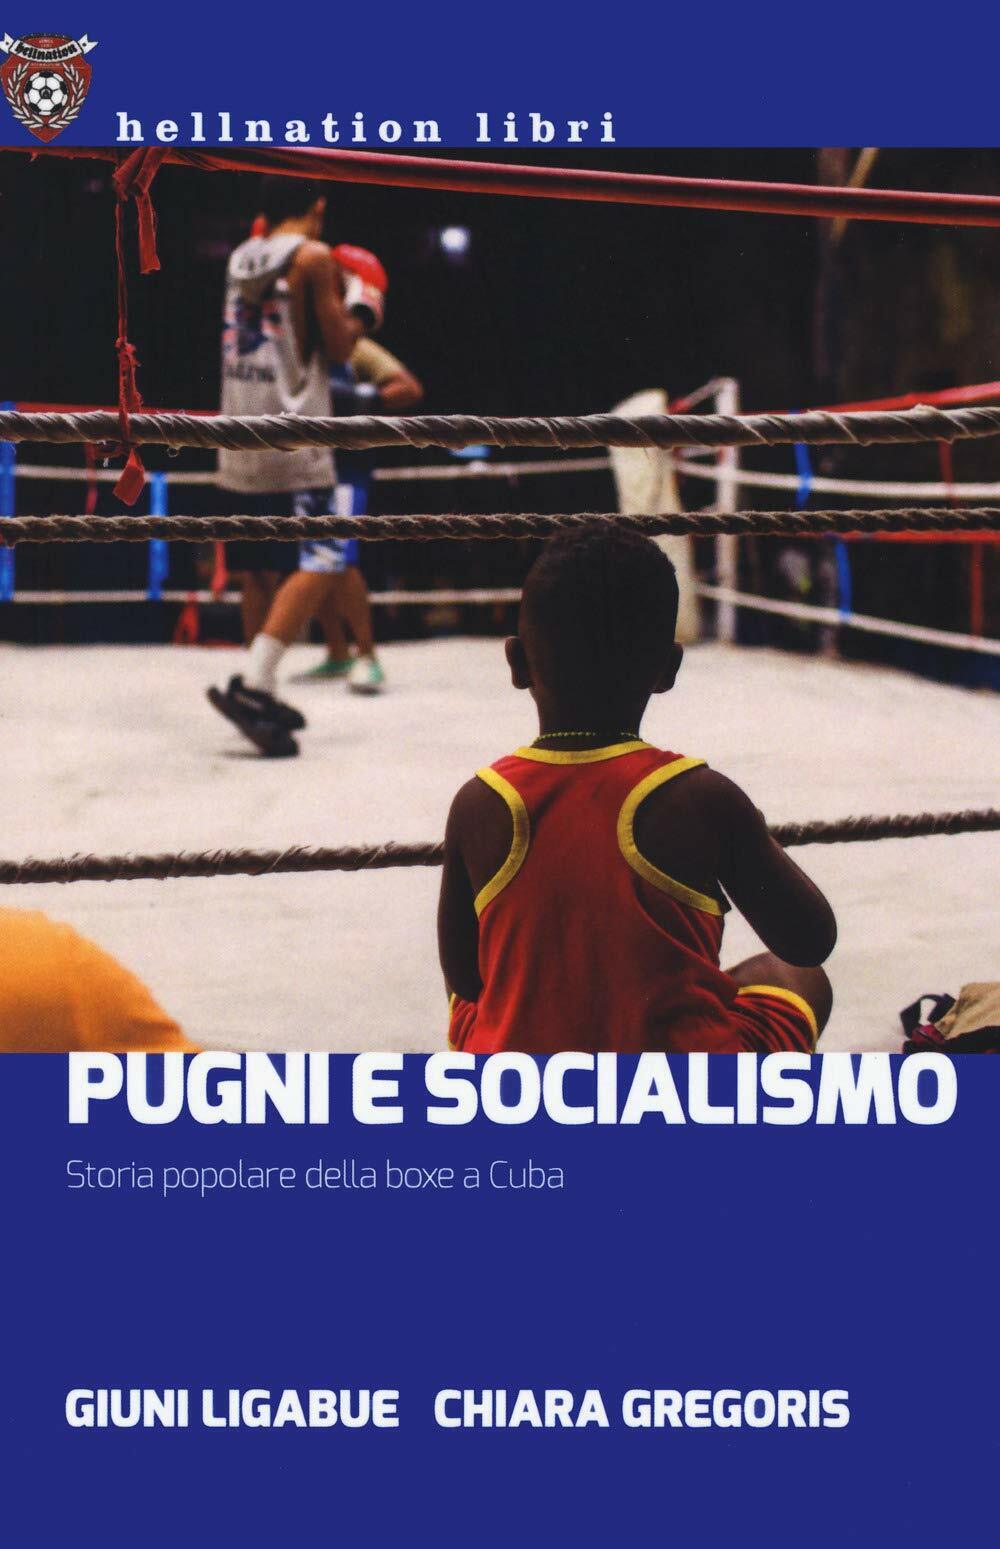 Pugni e socialismo - Giuni Ligabue, Chiara Gregoris - Red Star Press, 2021 libro usato